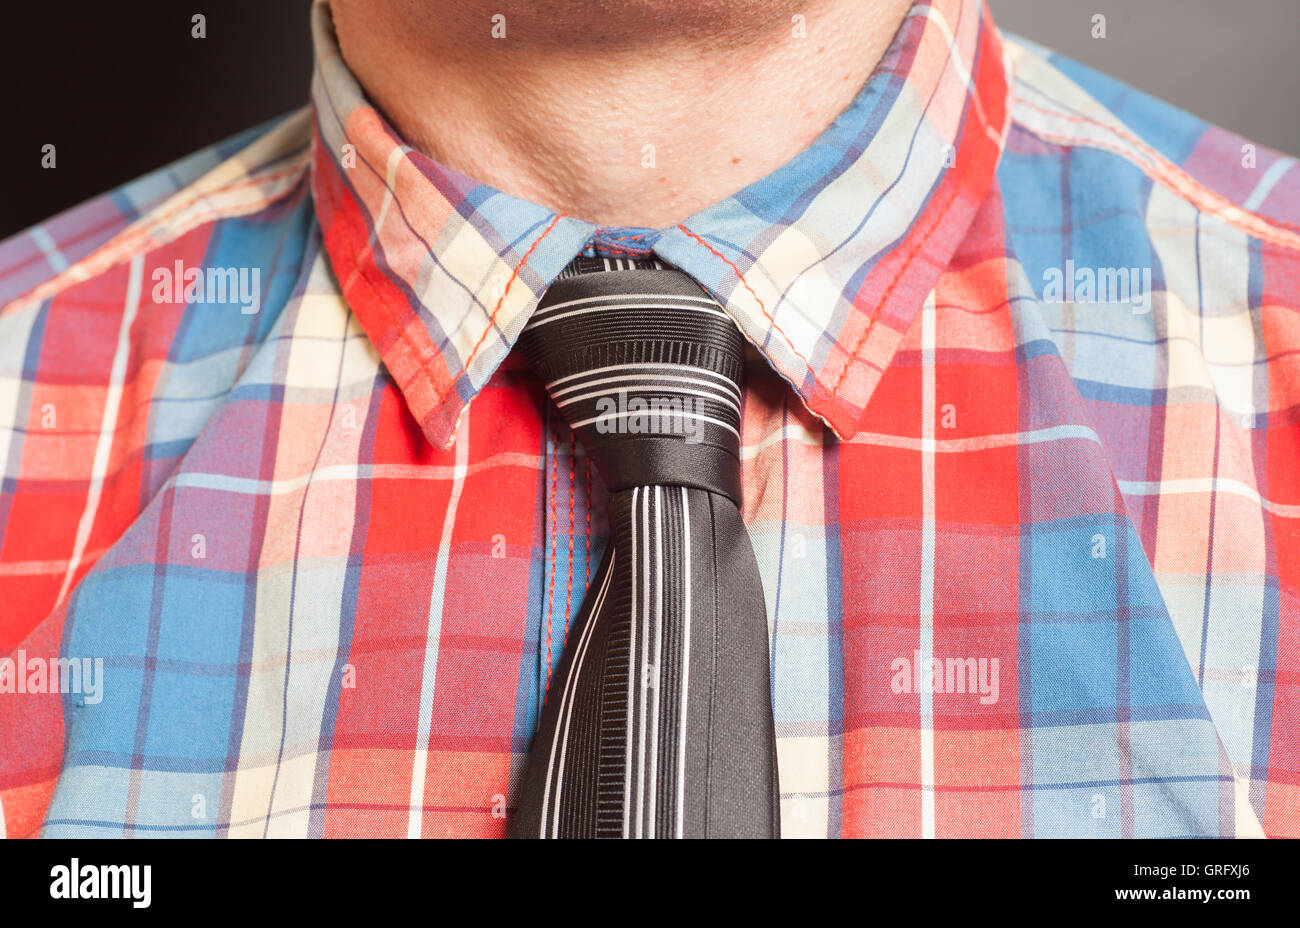 hombre viste camisa cuadros con corbata negra sobre gris Fotografía stock - Alamy